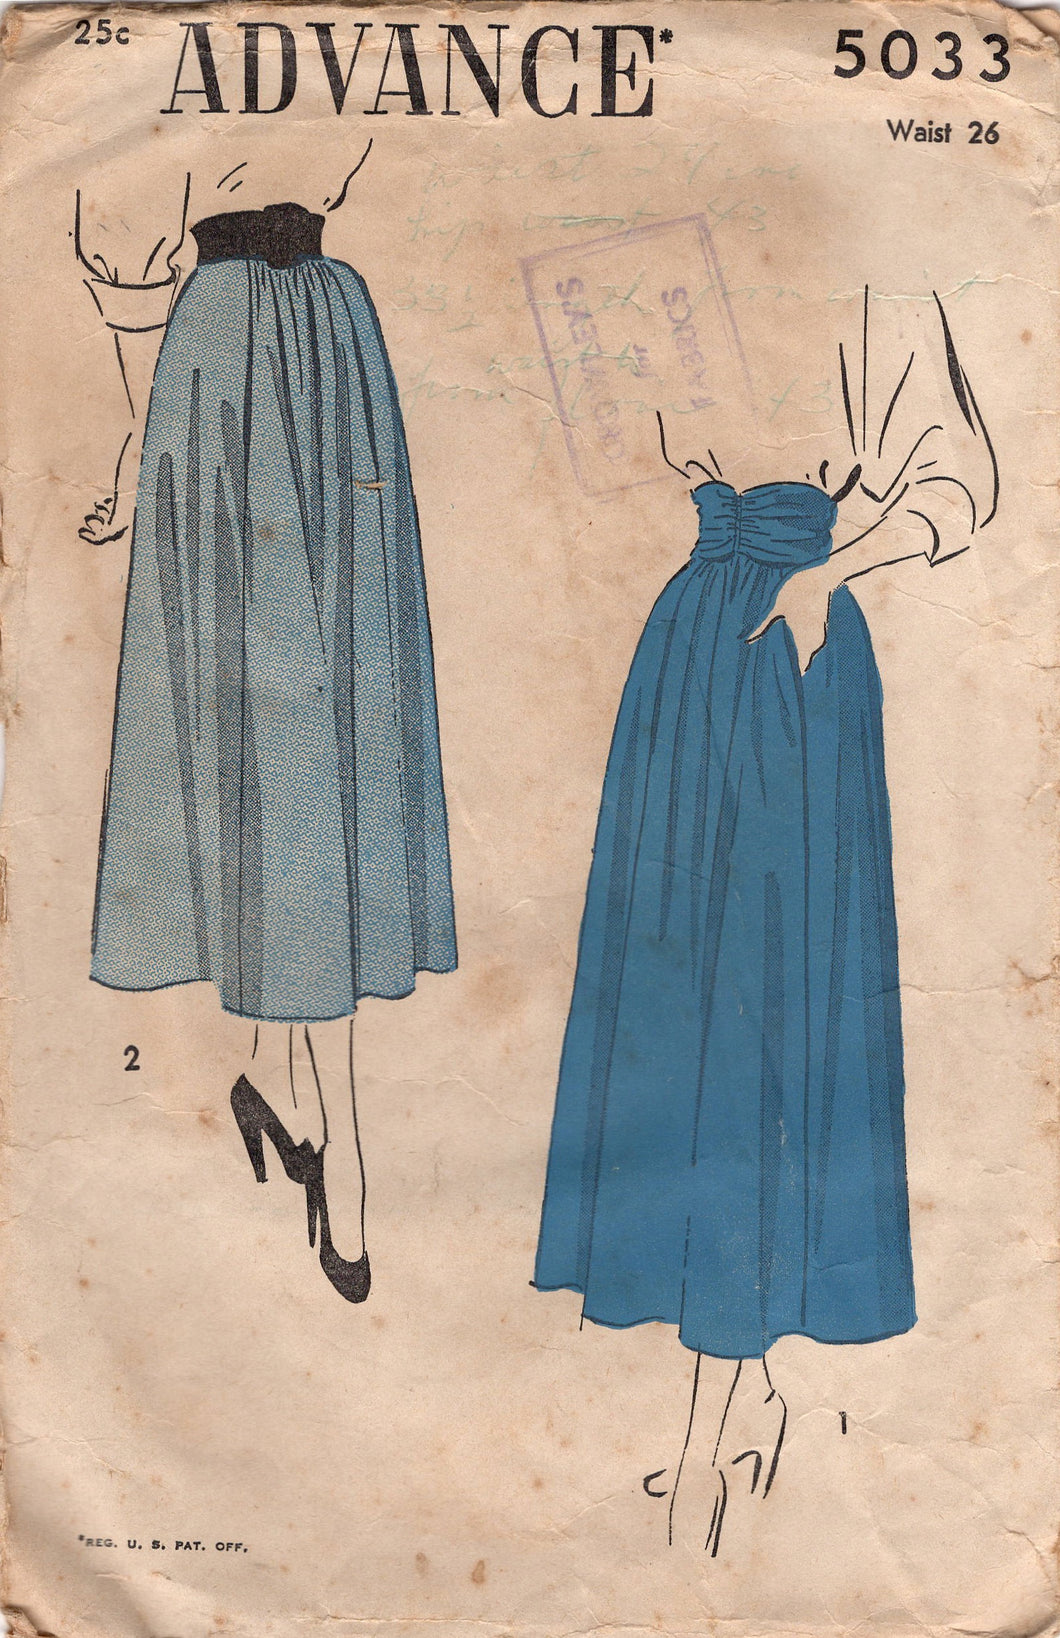 1940's Advance Gathered Skirt and Cummerbund Pattern - Waist 26